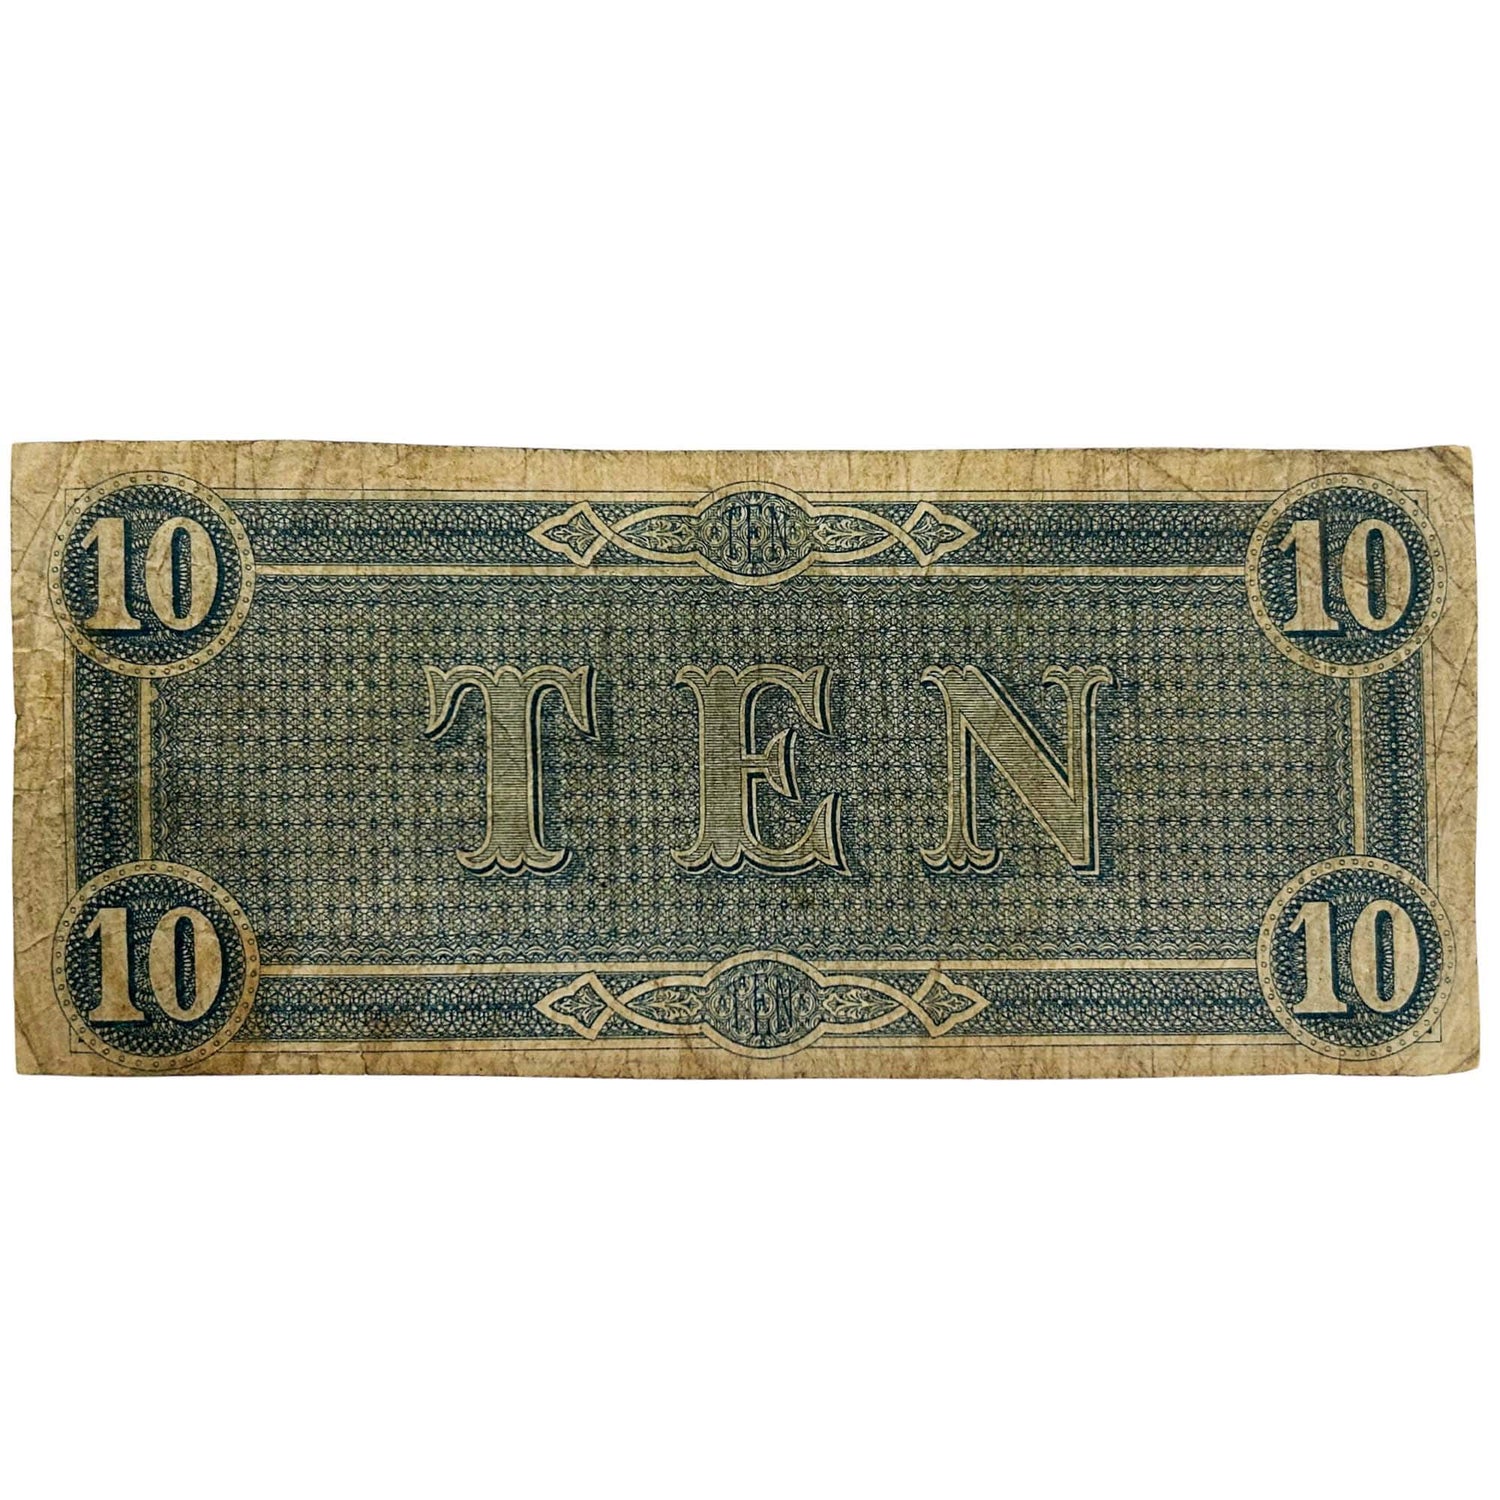 1864 Confederate States of America $10 Federal Reserve Note Back